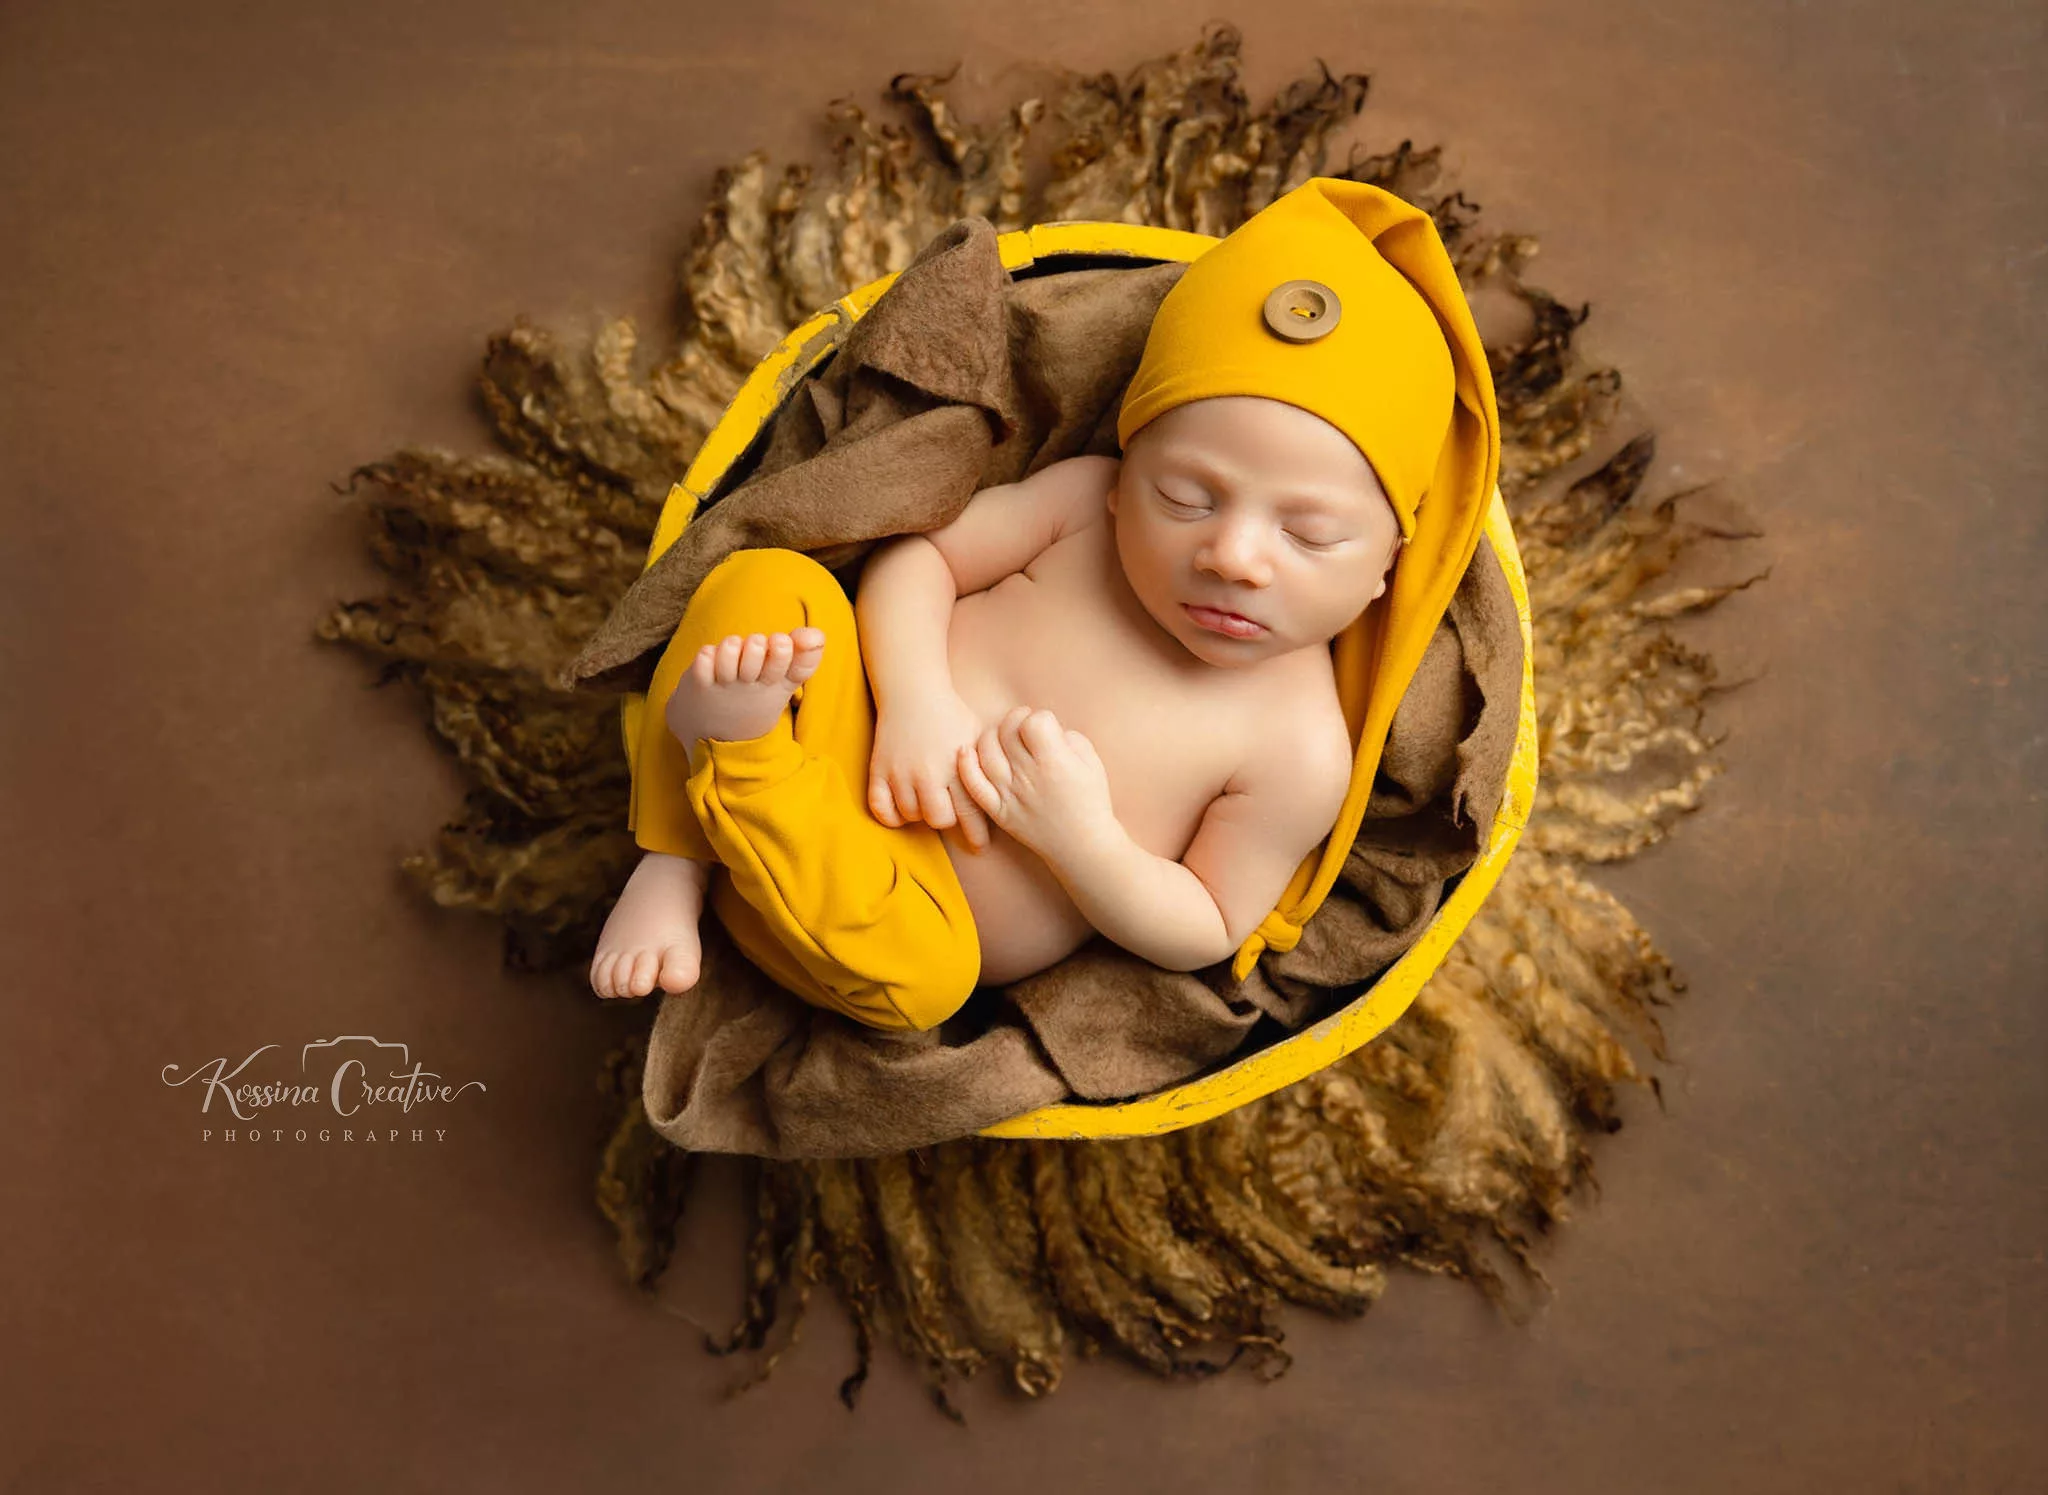 Orlando New born Photographer Photo Studio Baby Boy brown and yellow nursery